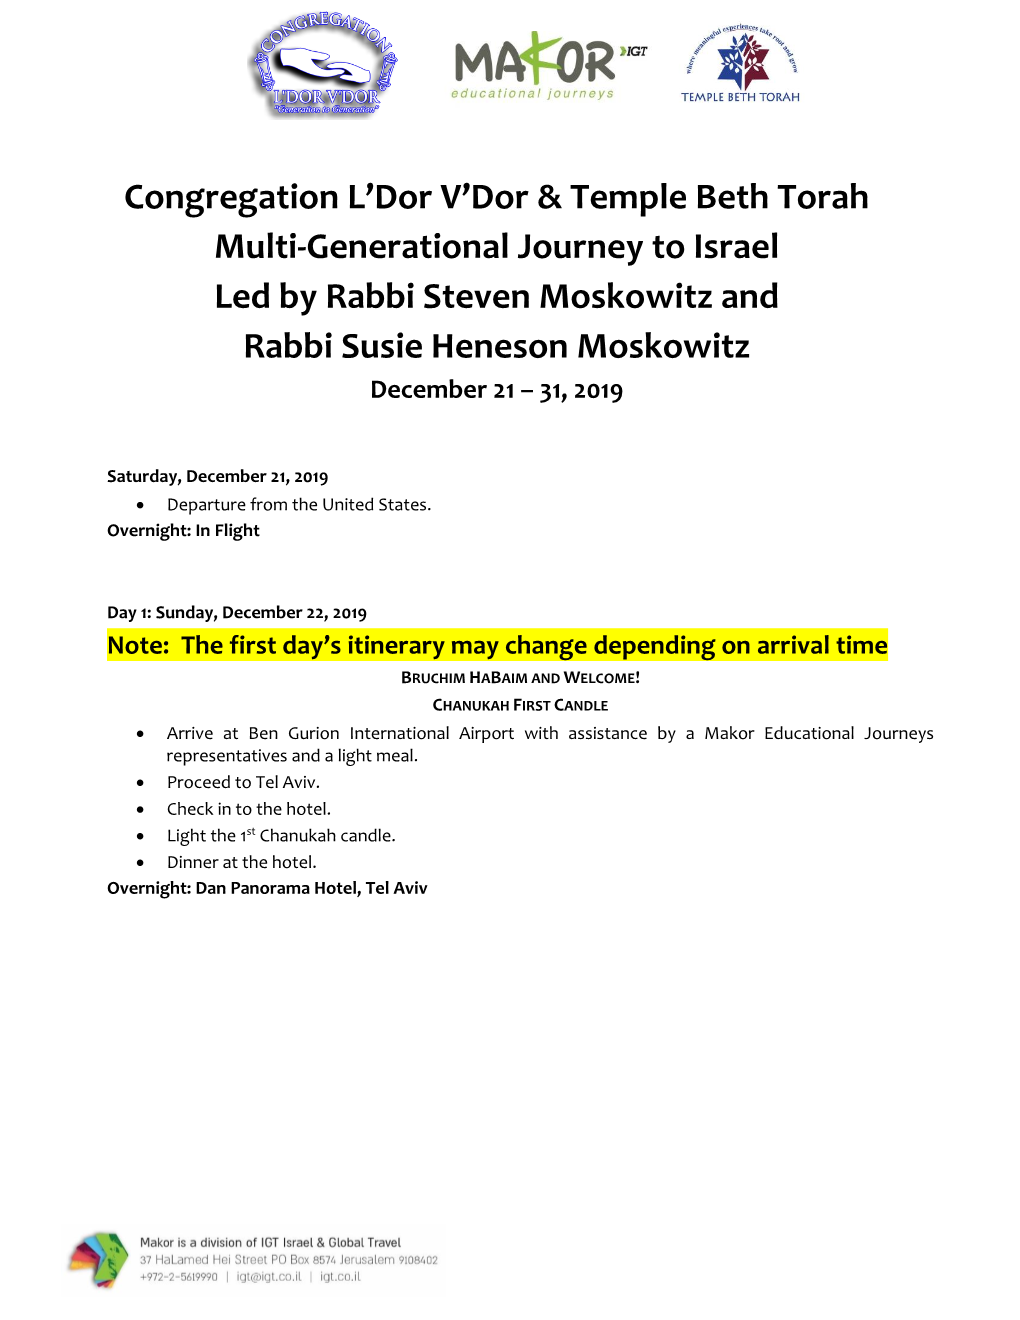 Congregation L'dor V'dor & Temple Beth Torah Multi-Generational